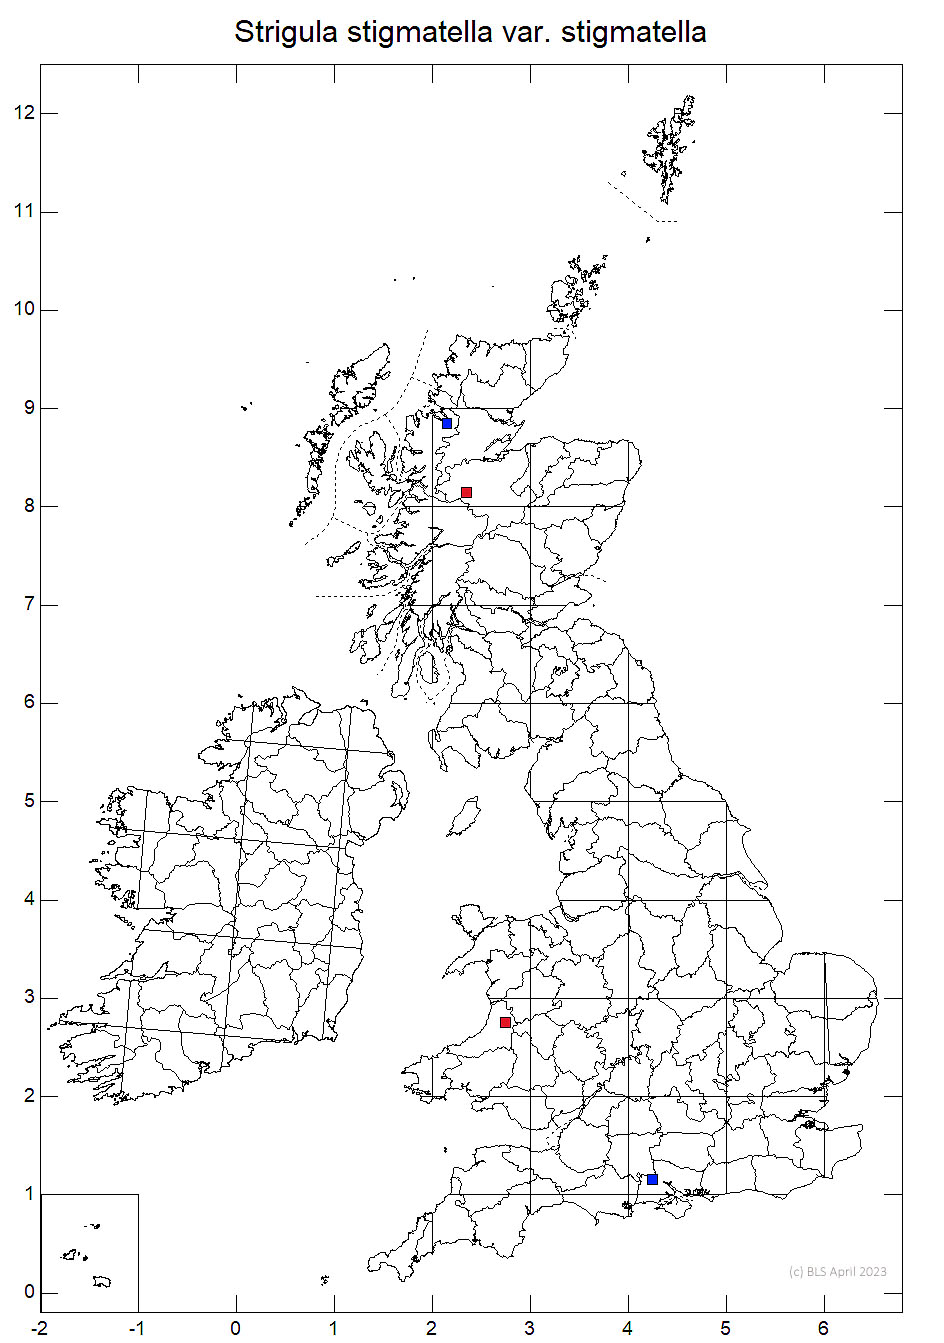 Strigula stigmatella var. stigmatella 10km sq distribution map